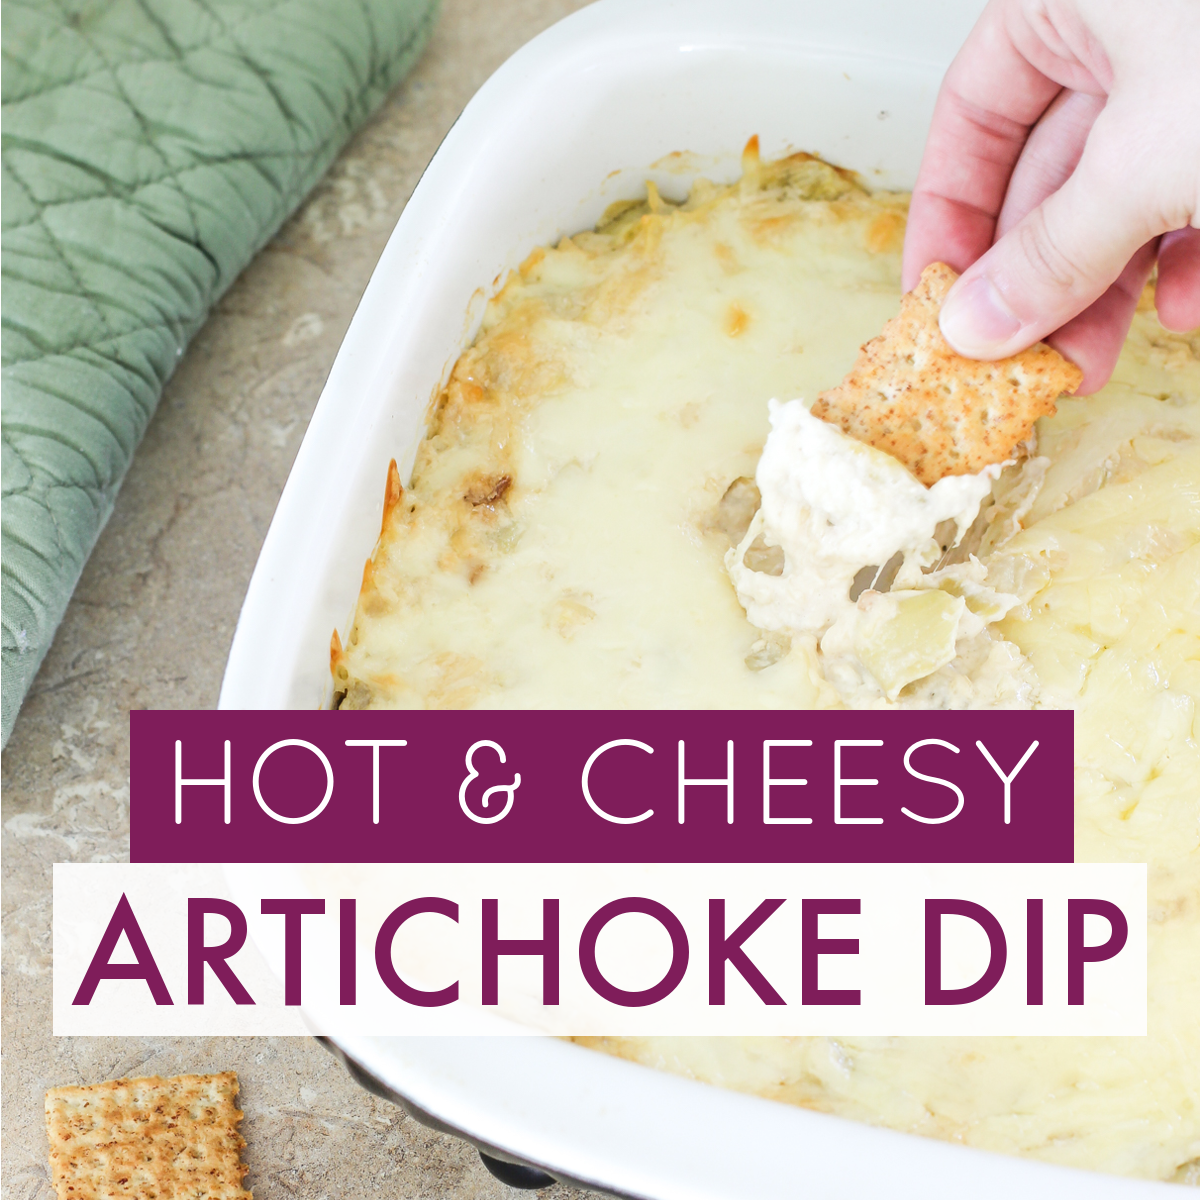 Hot & Cheesy Artichoke Dip